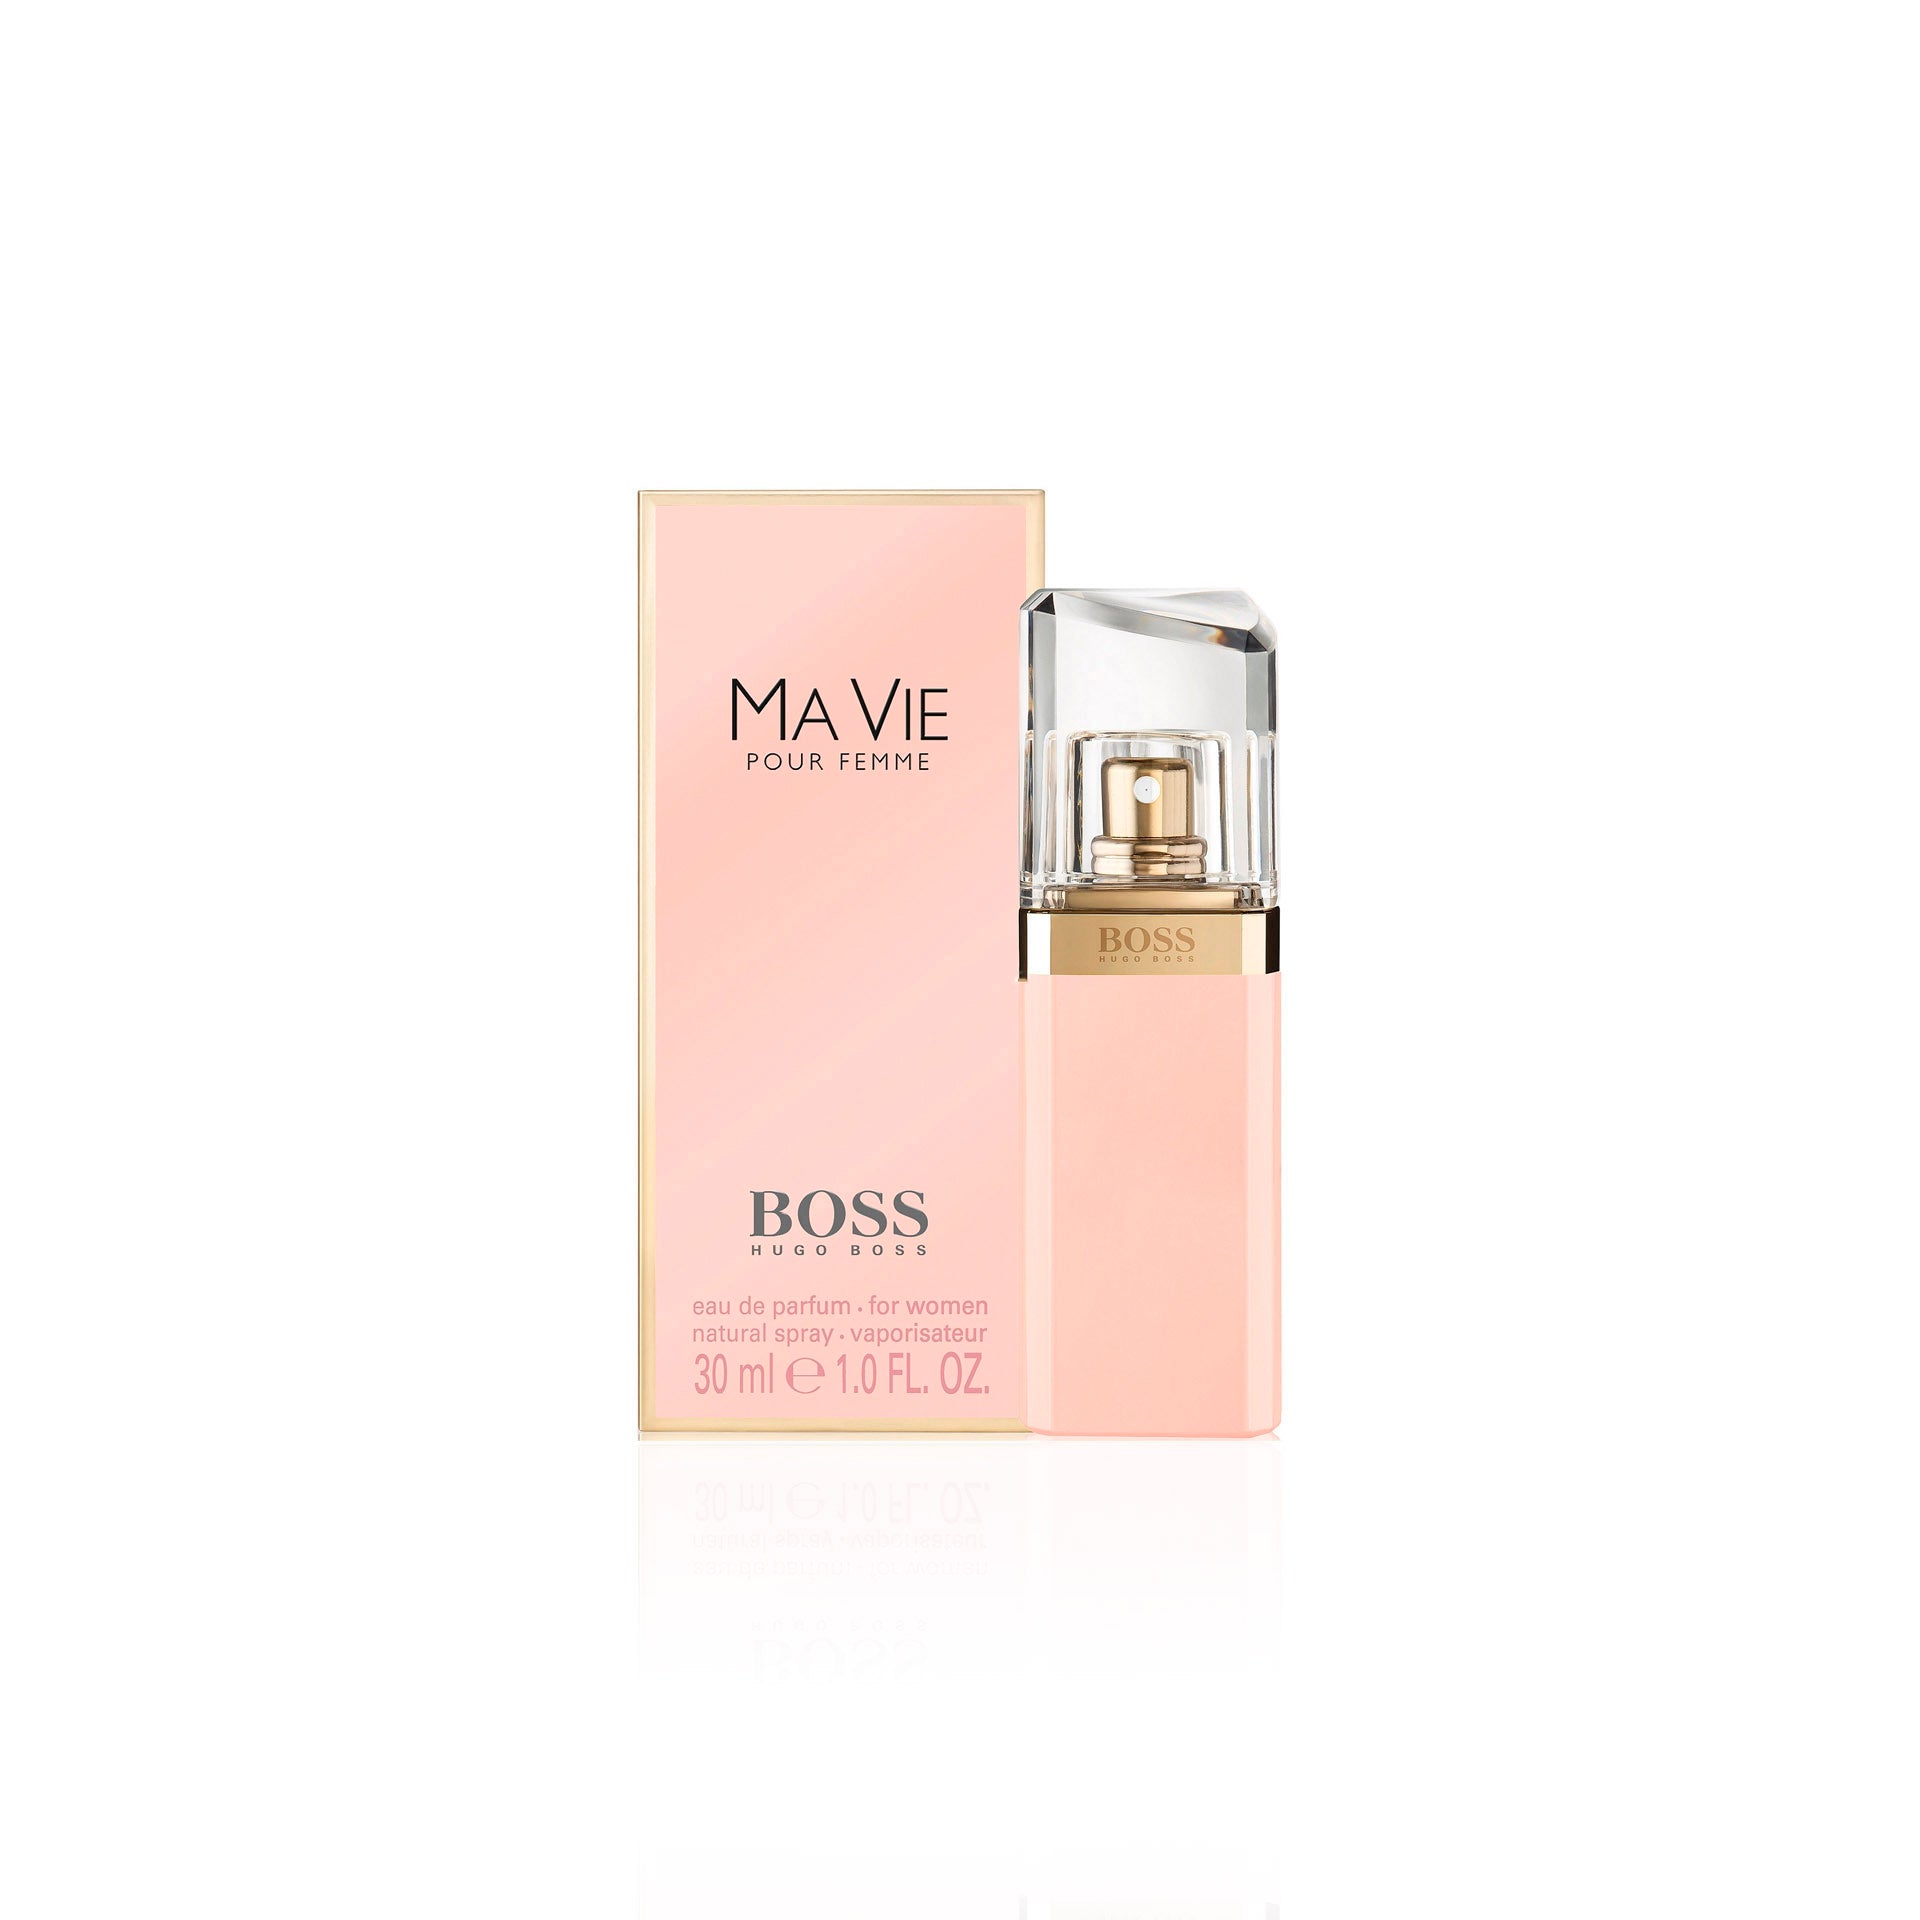 Hugo Boss Boss Ma Vie Eau de Parfum Vaporizador 30 ml